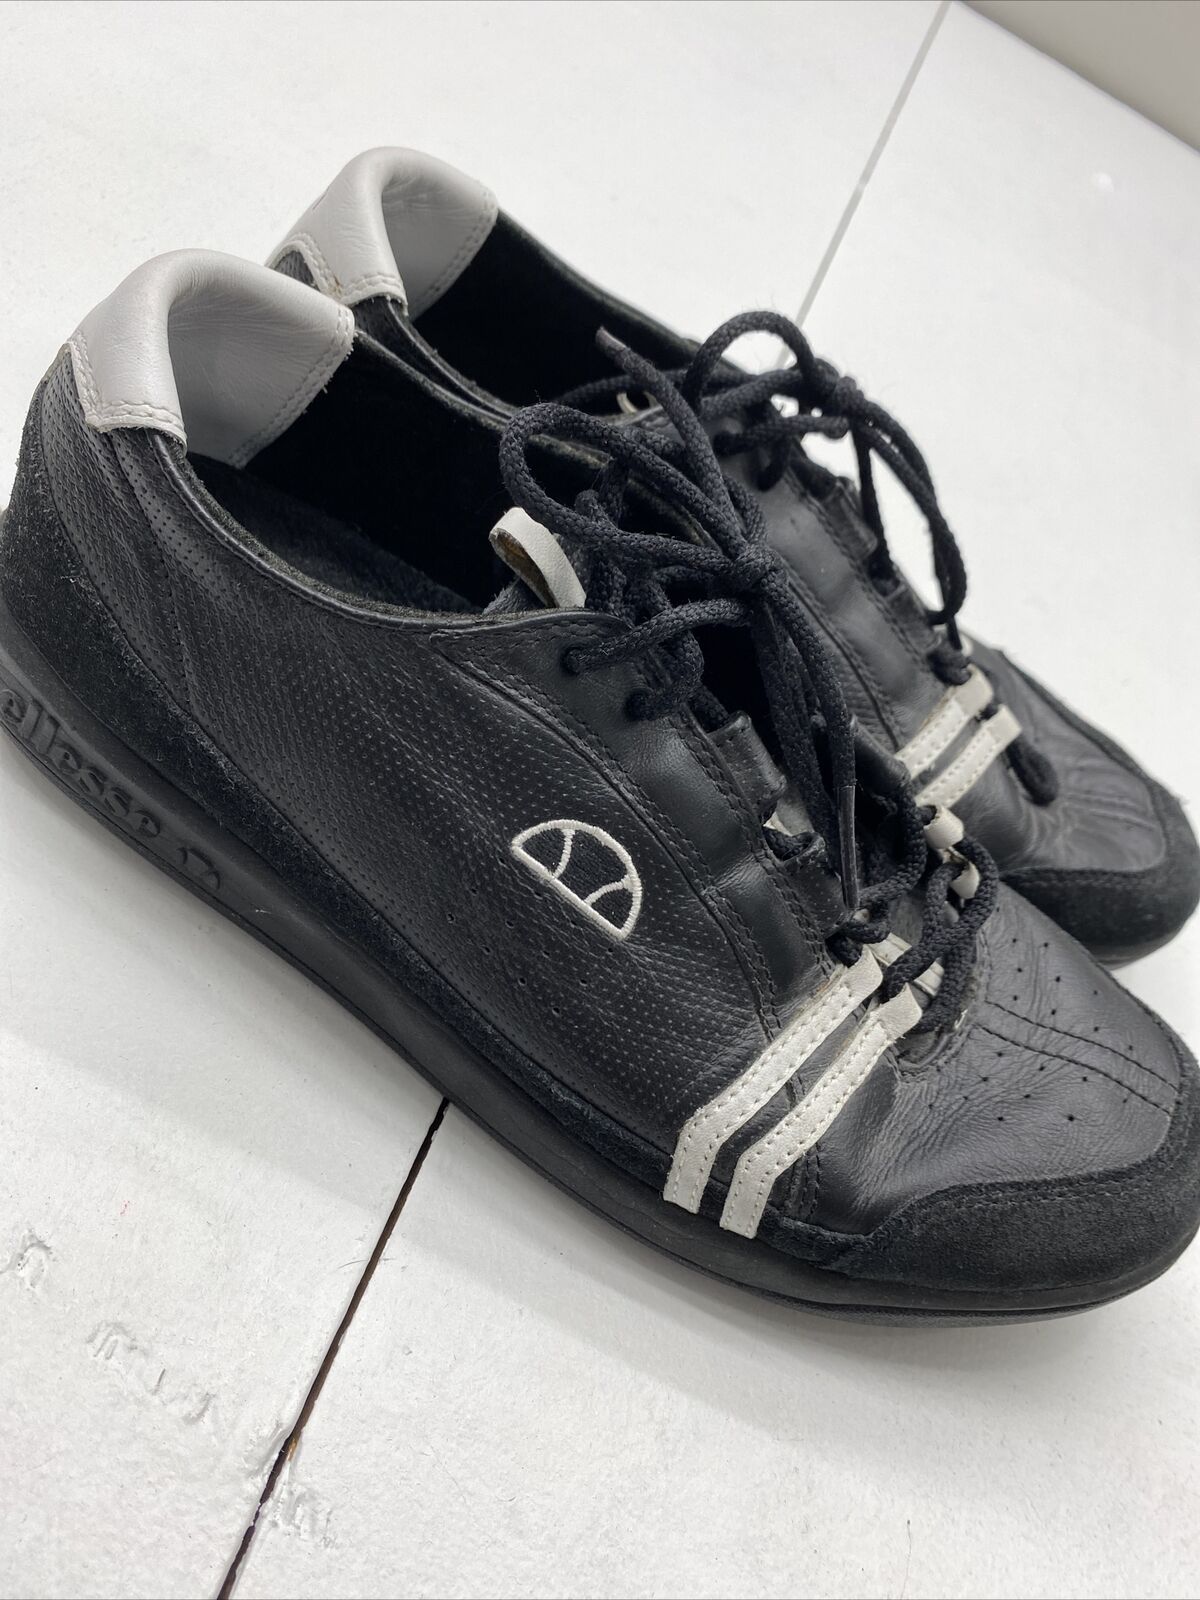 regeling Onafhankelijkheid man Ellesse Black Vita Low Top Leather Lace Up Sneakers Shoes Women's Size -  beyond exchange